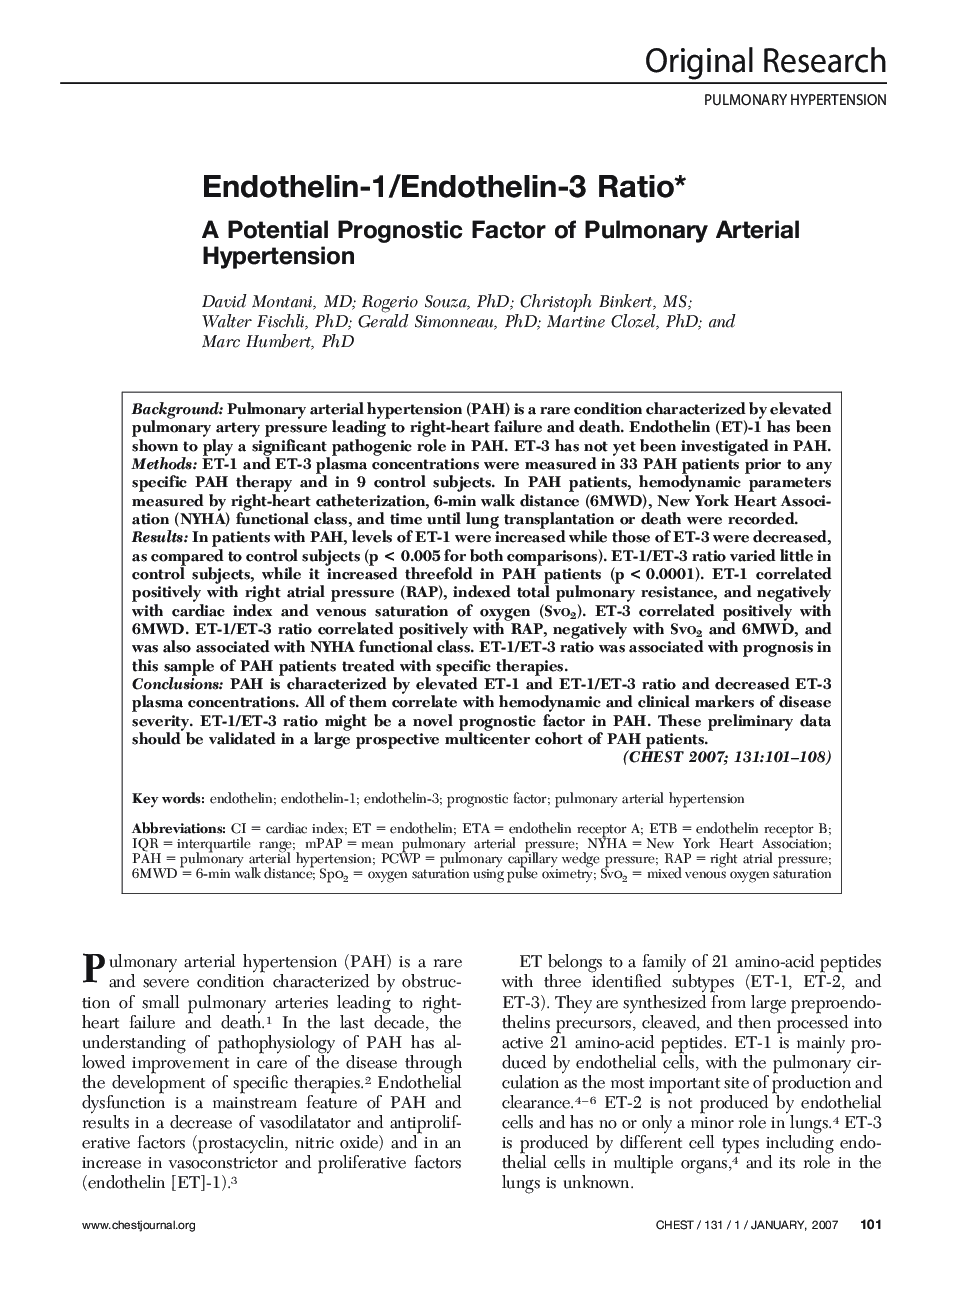 Endothelin-1/Endothelin-3 Ratio : A Potential Prognostic Factor of Pulmonary Arterial Hypertension